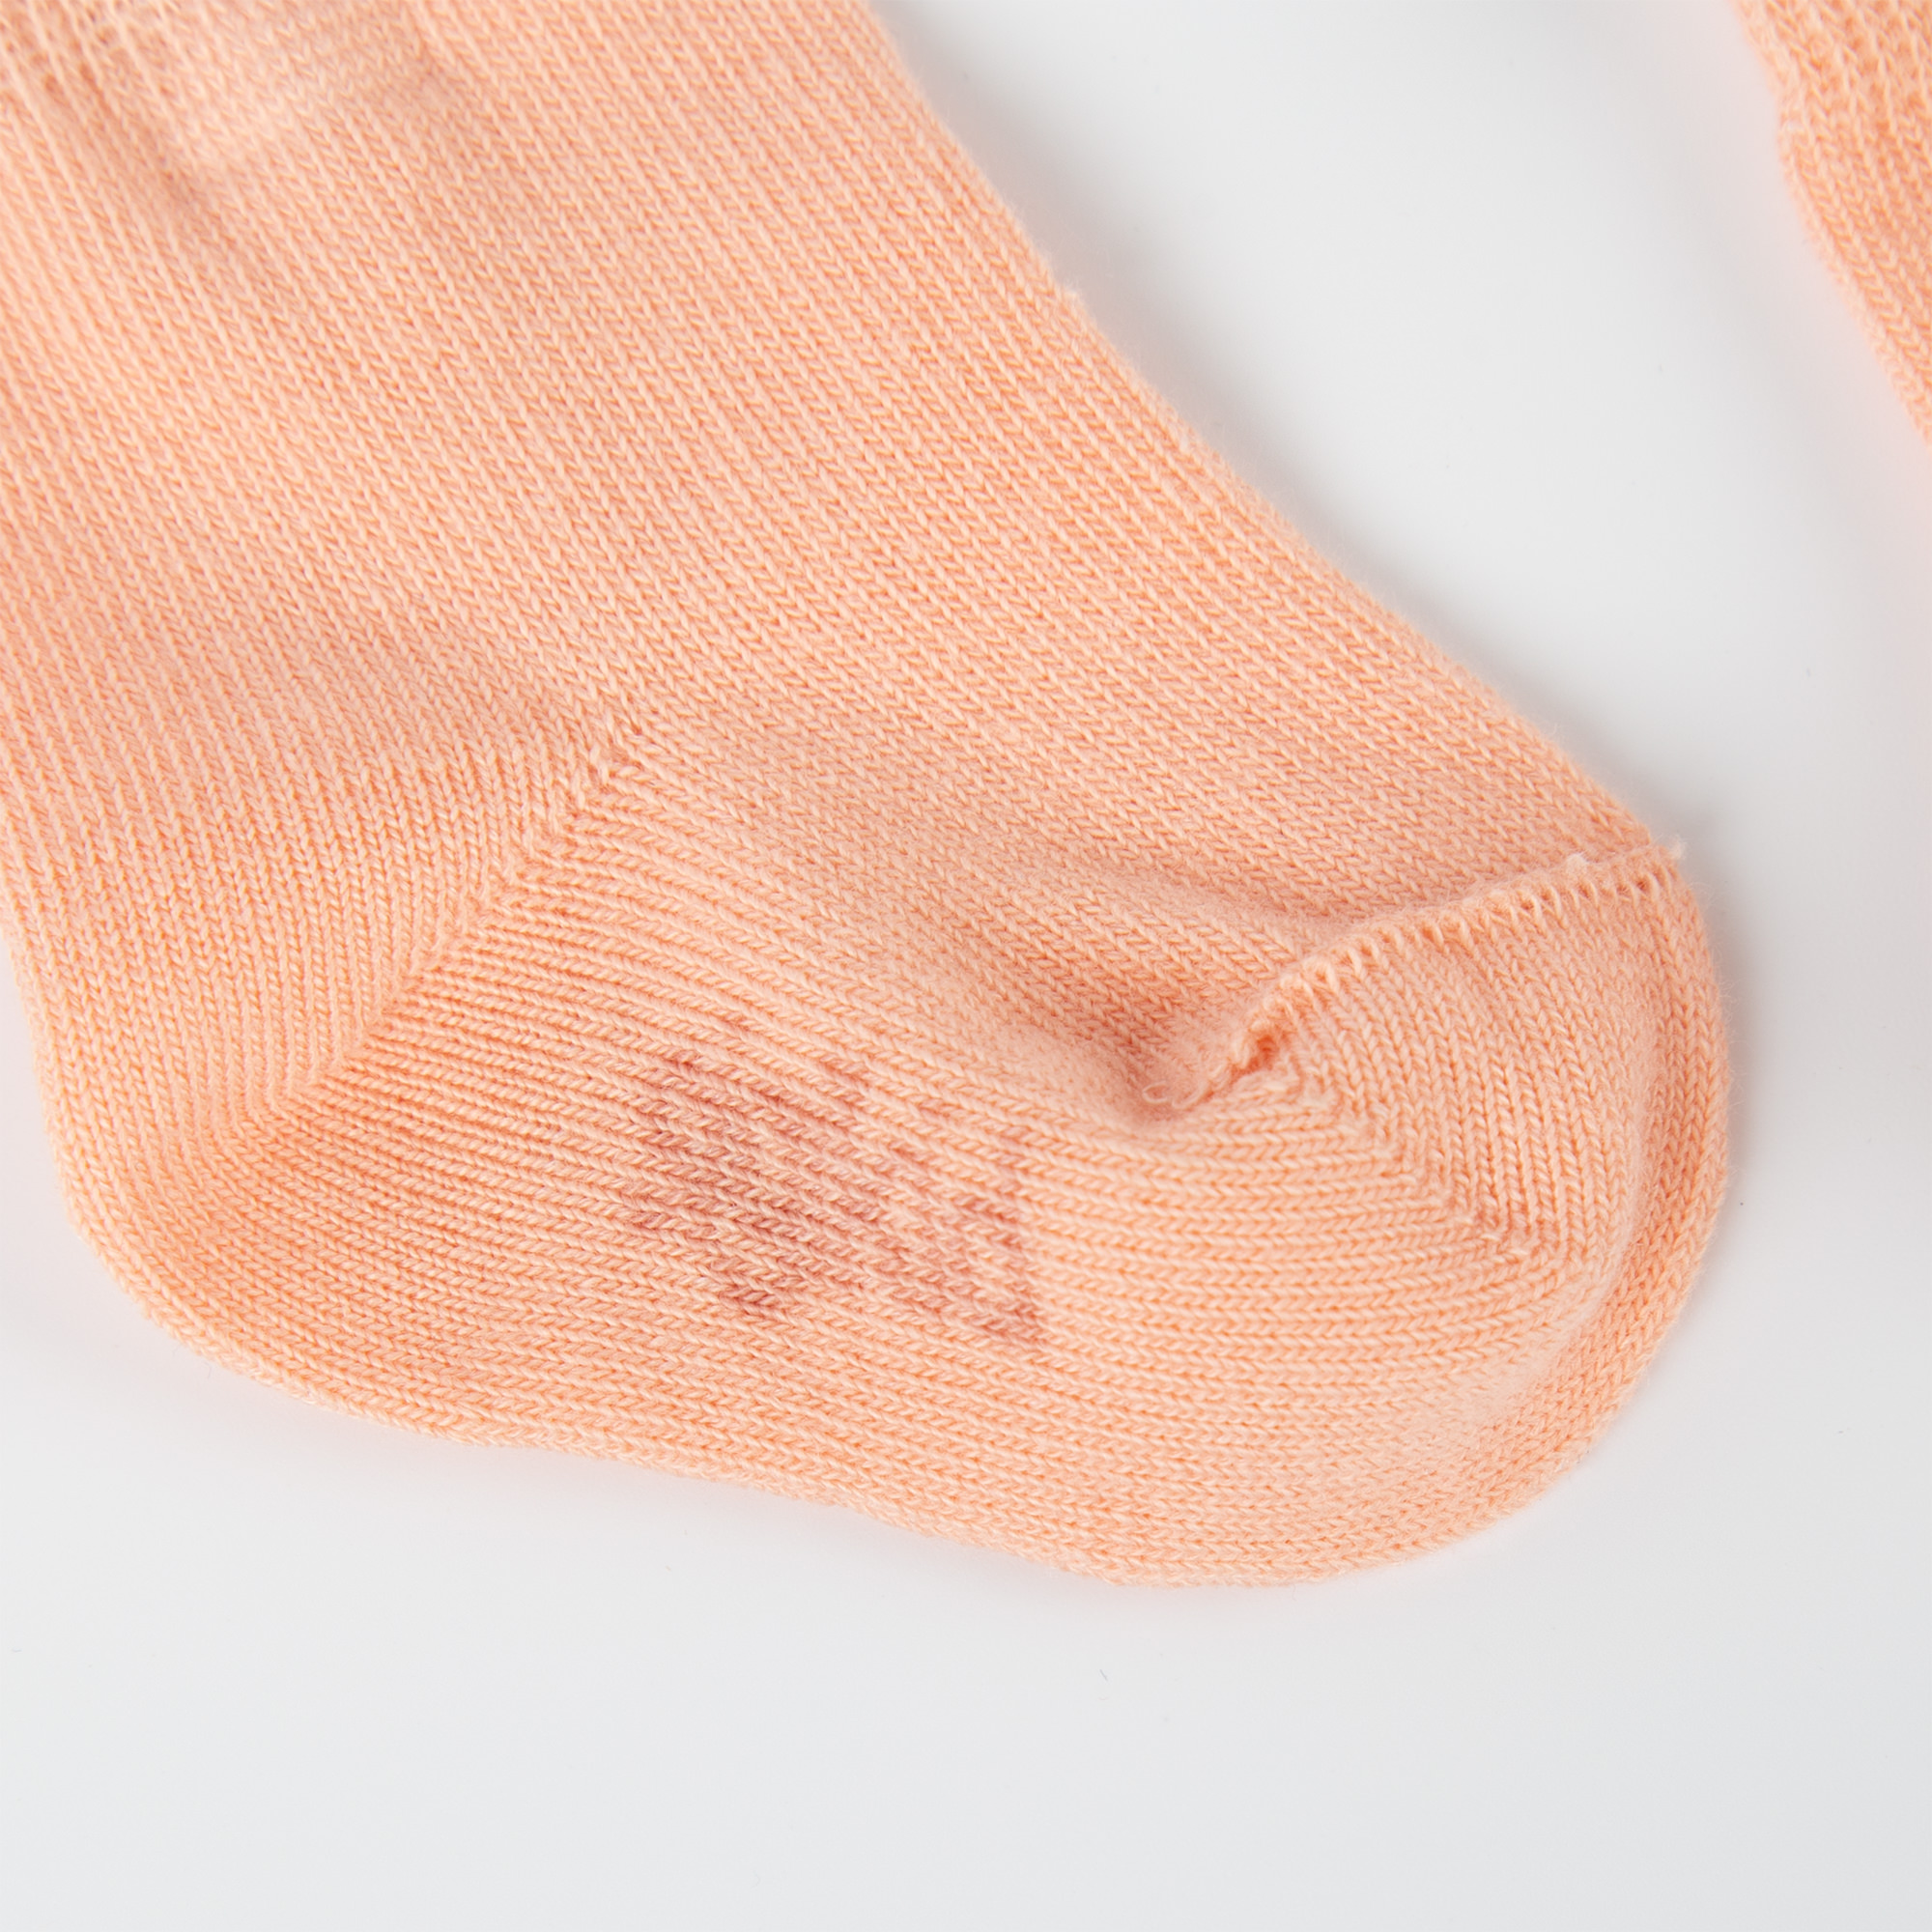 2-pair-set newborn baby socks, apricot/rosé